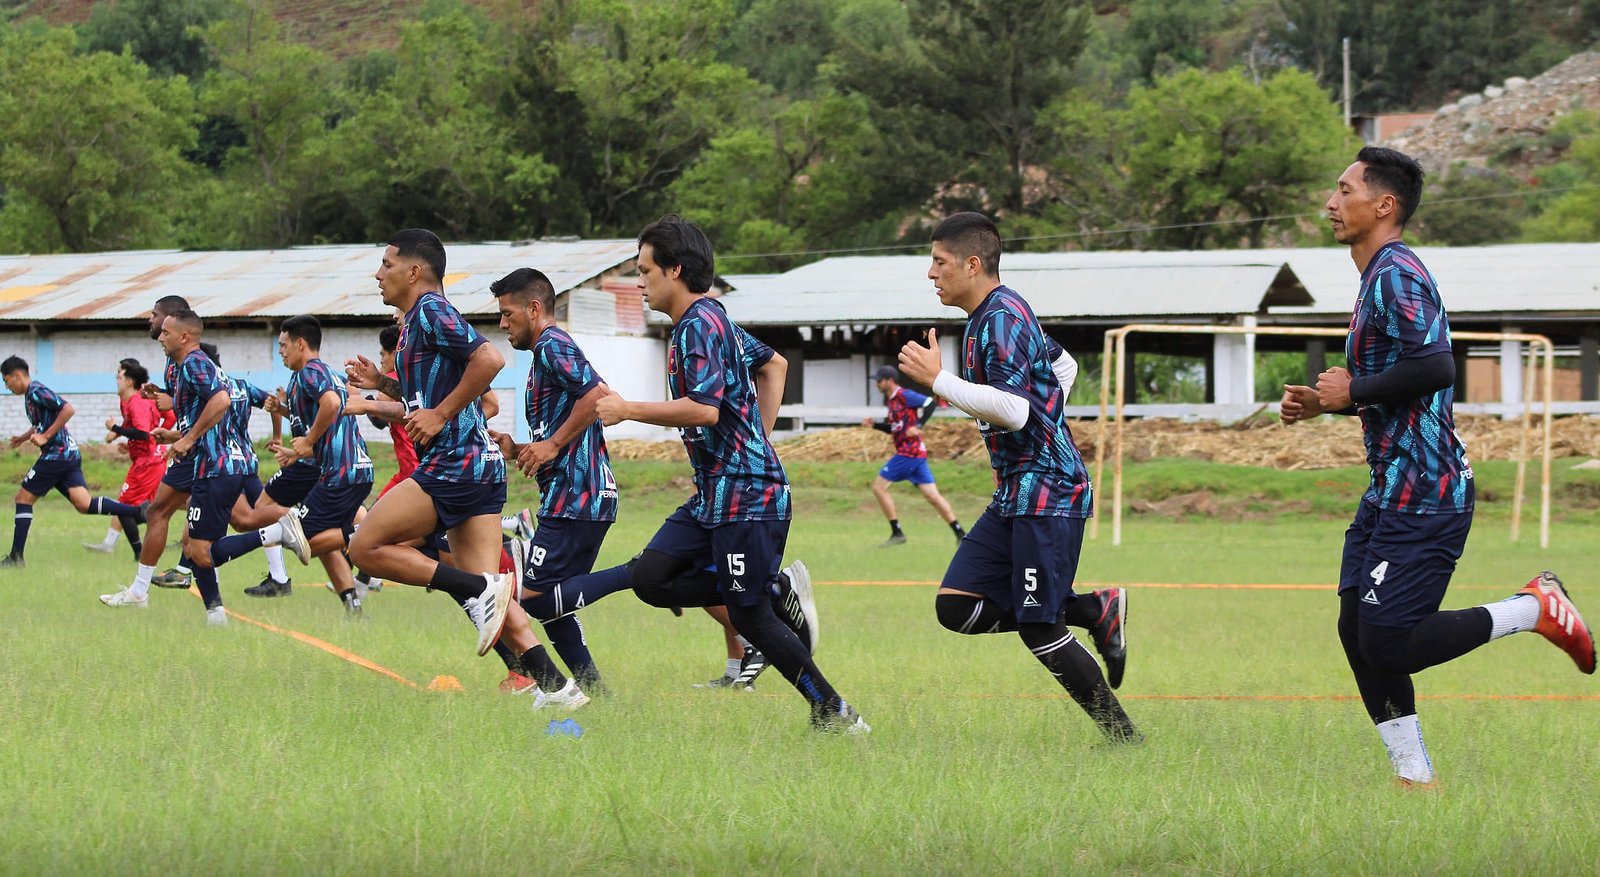 Liga 2: Alianza UDH promueve juveniles a su primer equipo